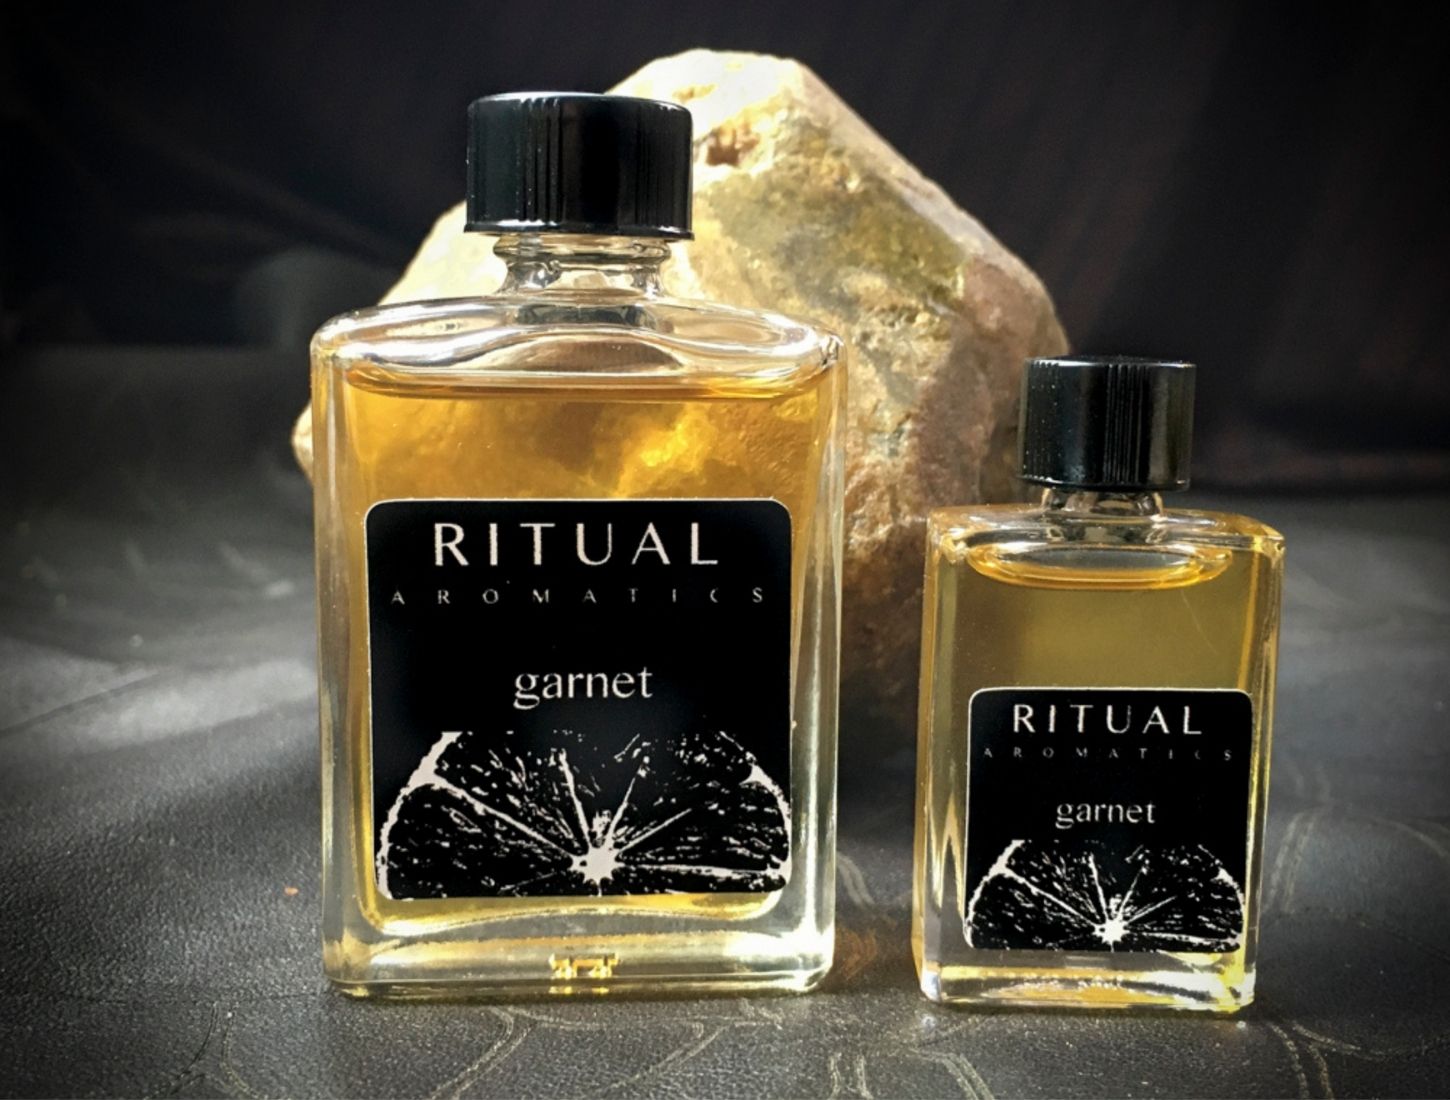 Ritual Aromatics Garnet Natural Perfume 5ml and 15 ml bottle with green garnet